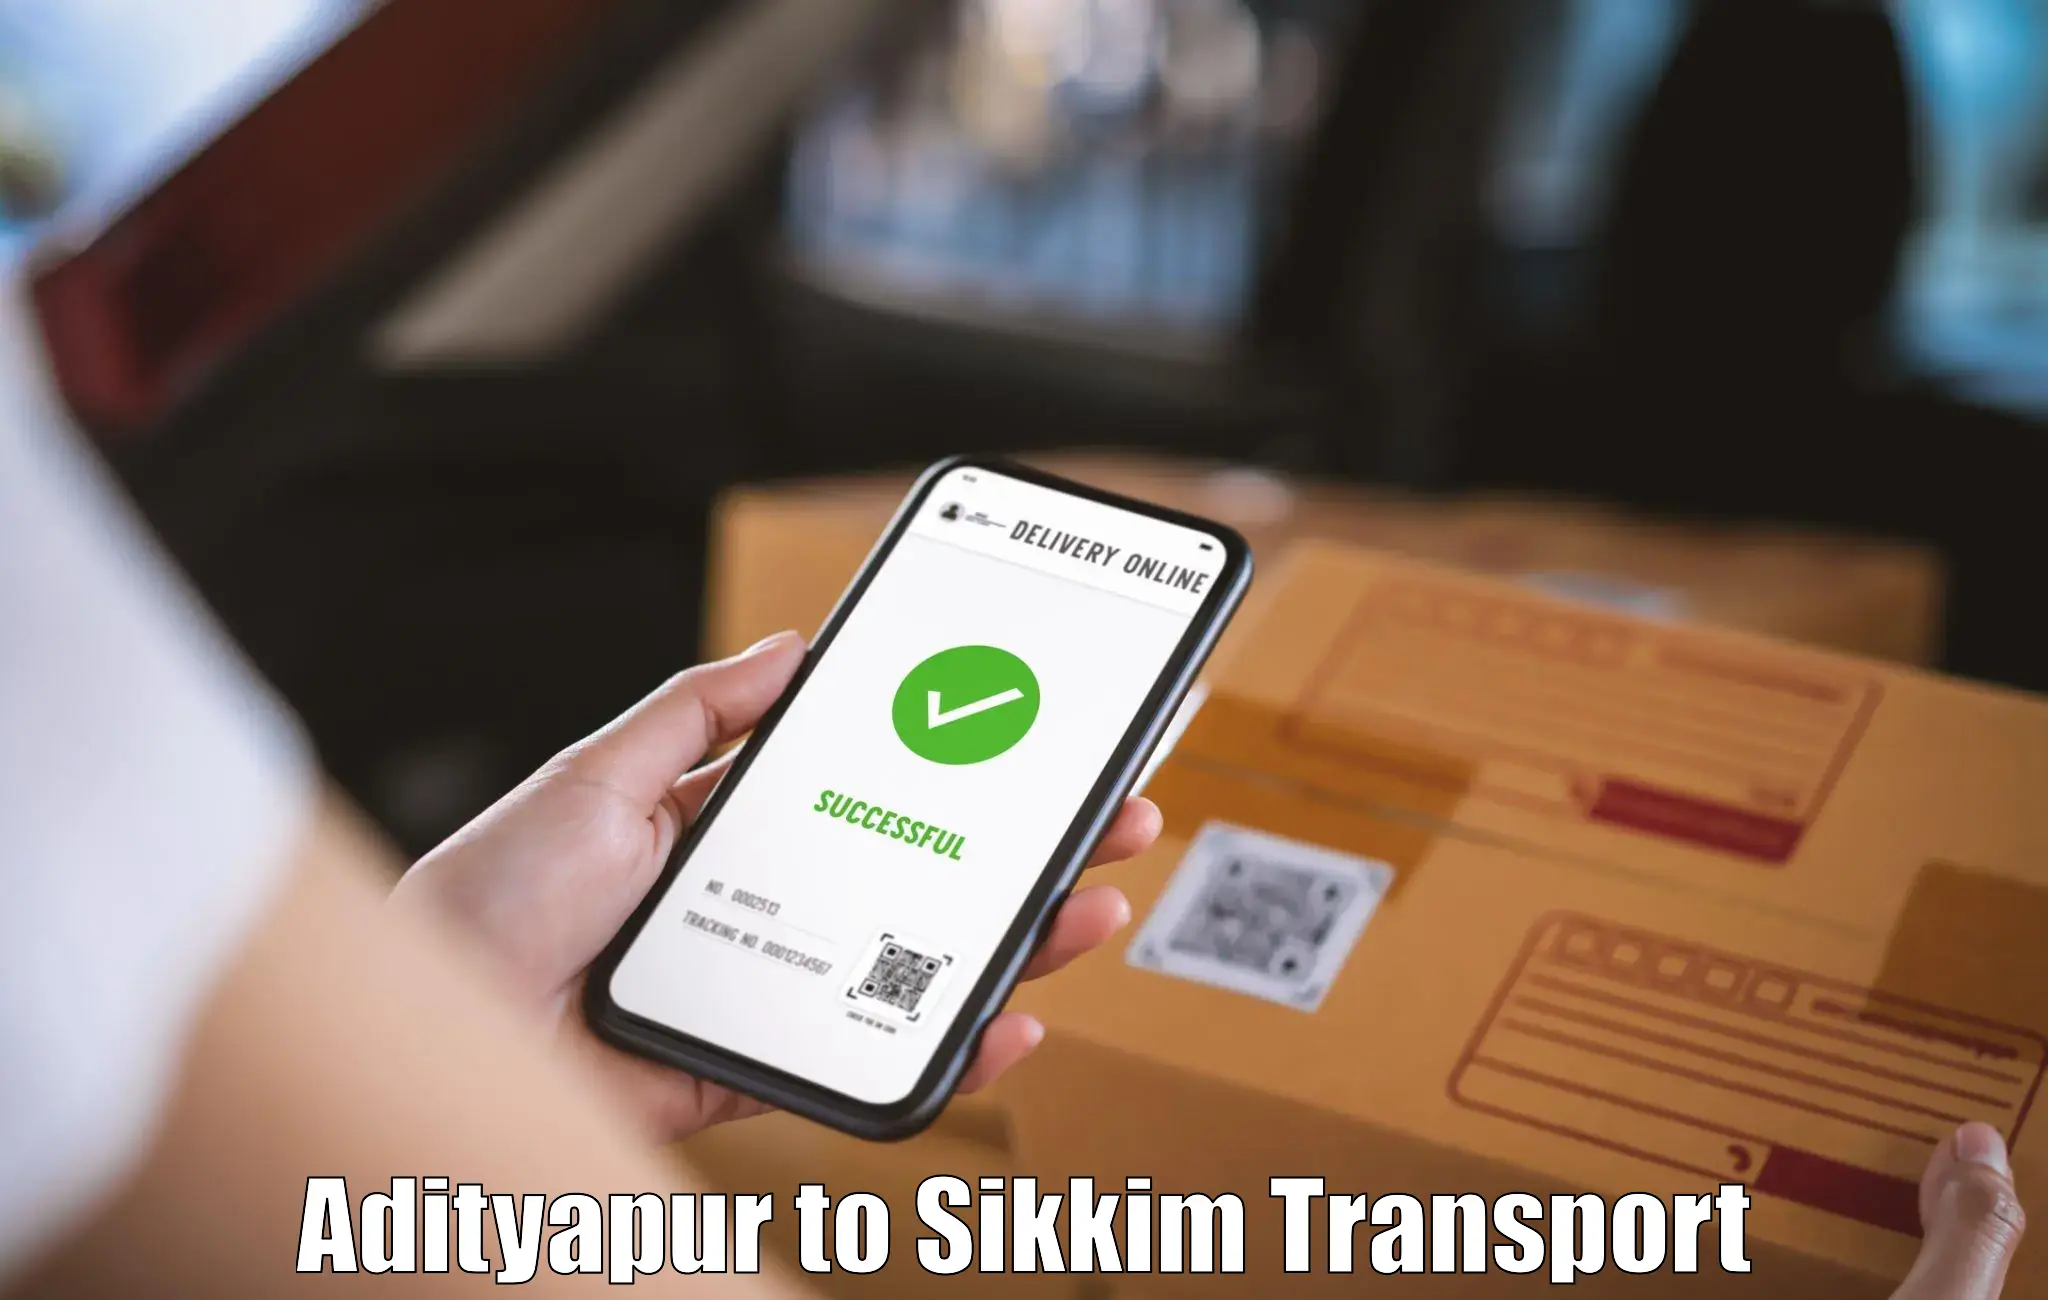 Transport in sharing Adityapur to North Sikkim